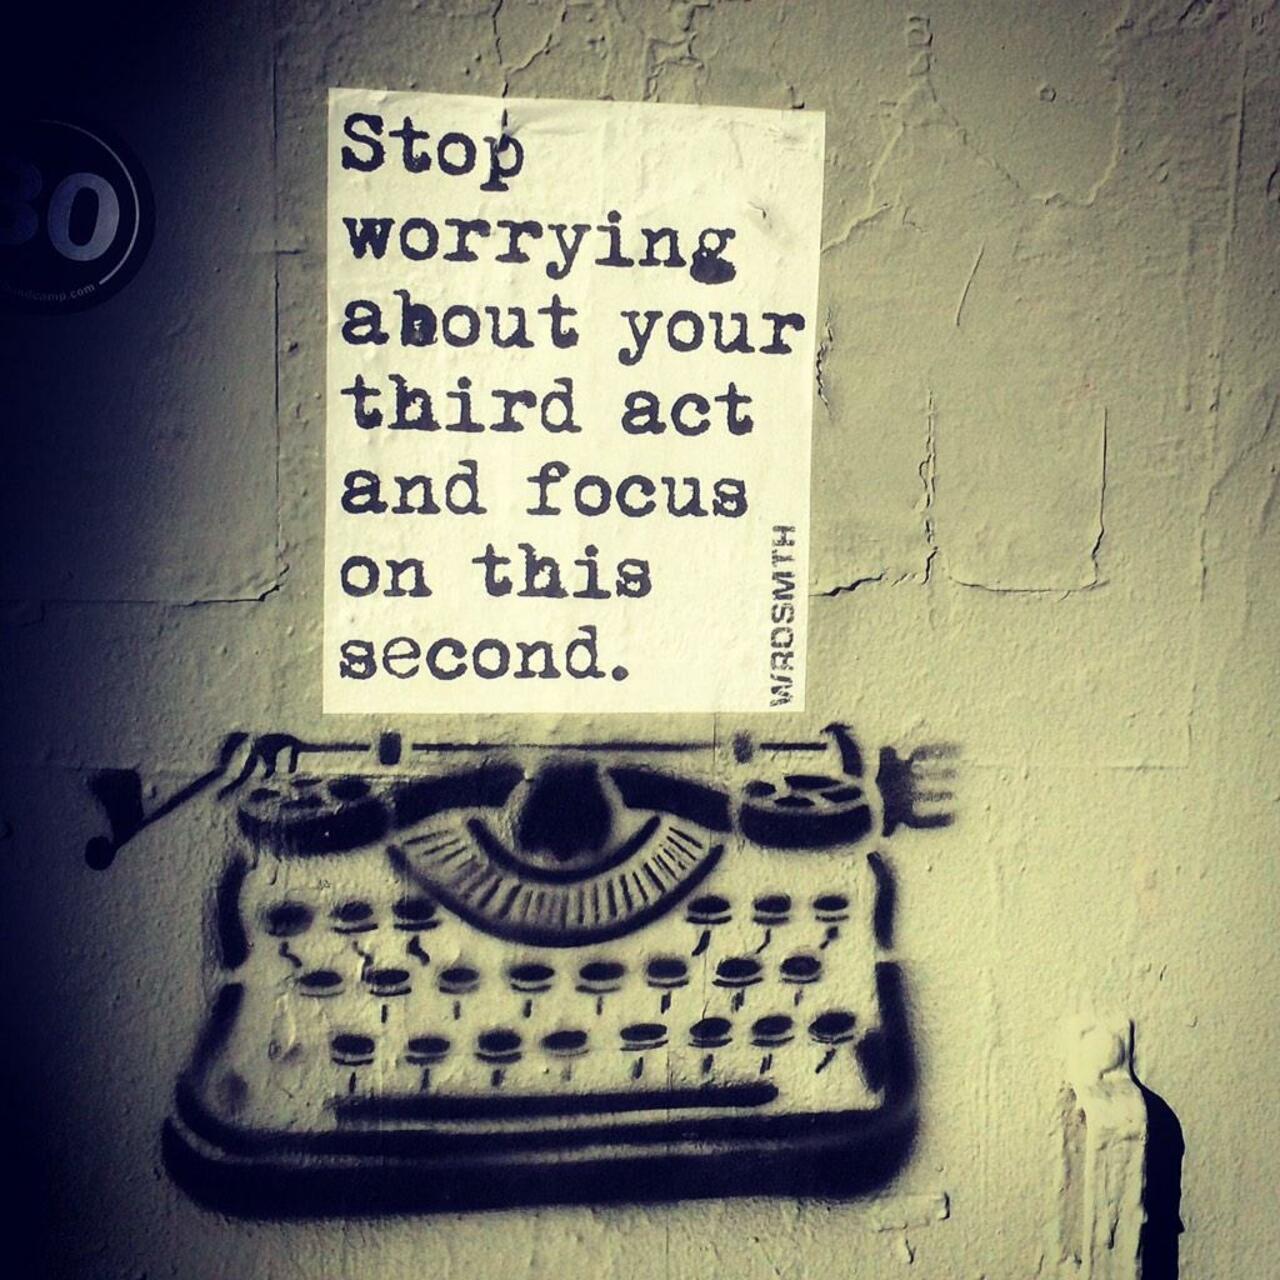 Stop Worrying... #graffiti #streetart #art  @WRDSMTHinLA #hollywood #urbanart #typewriter #hollywood #lastreetart http://t.co/hvGPcg8Aer